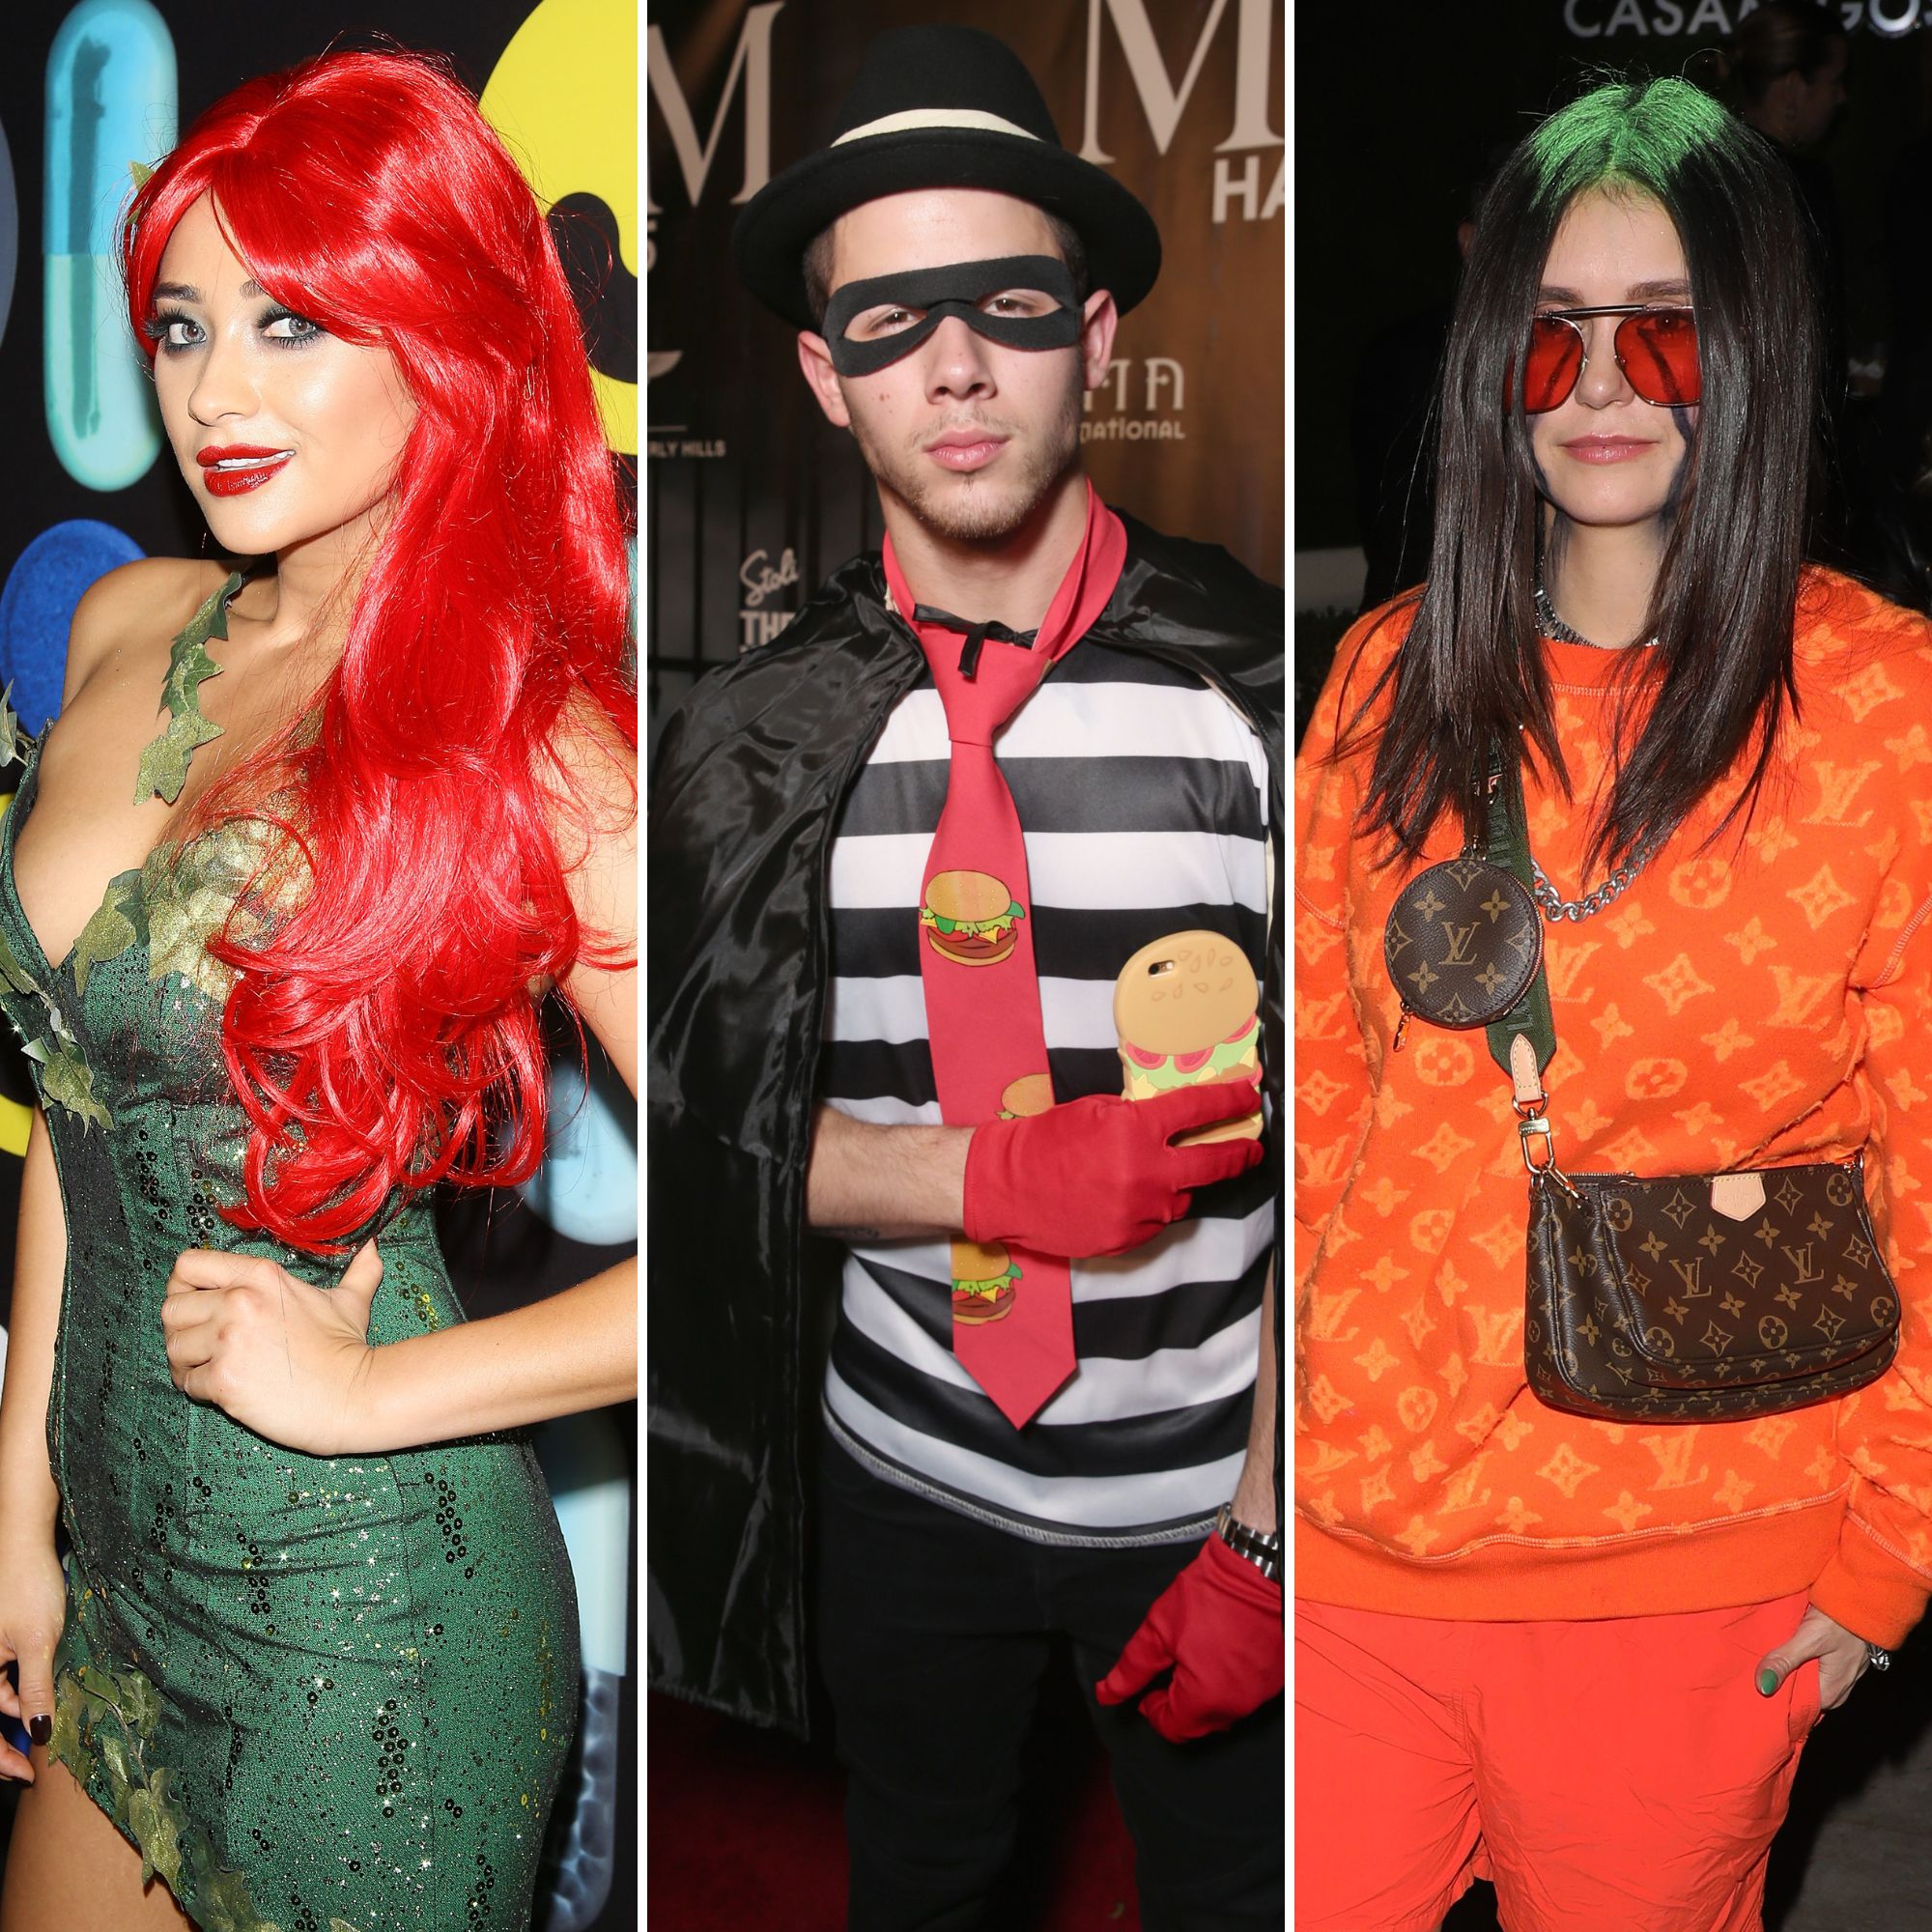 46 Easy Halloween Costume Ideas From Celebrities